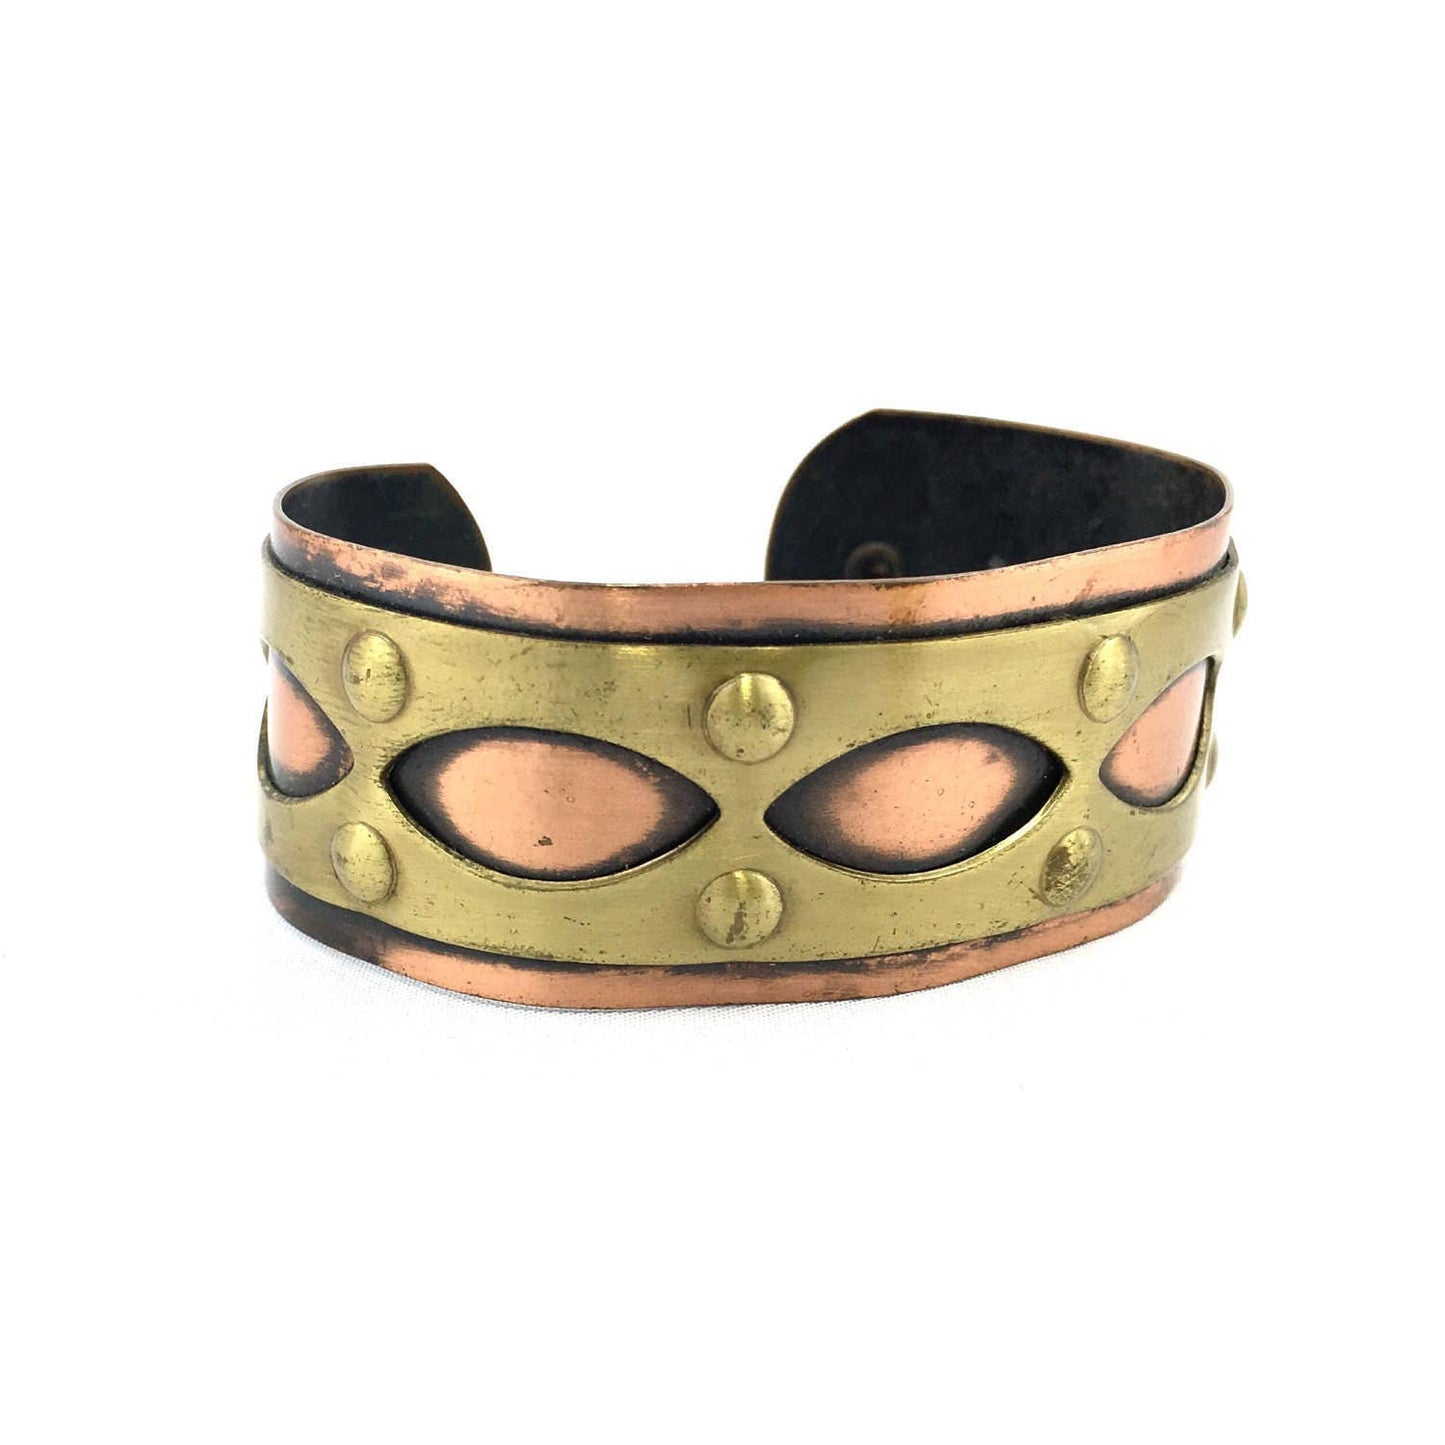 SALE Vintage Cuff Bracelet: Copper & Brass c.1960's